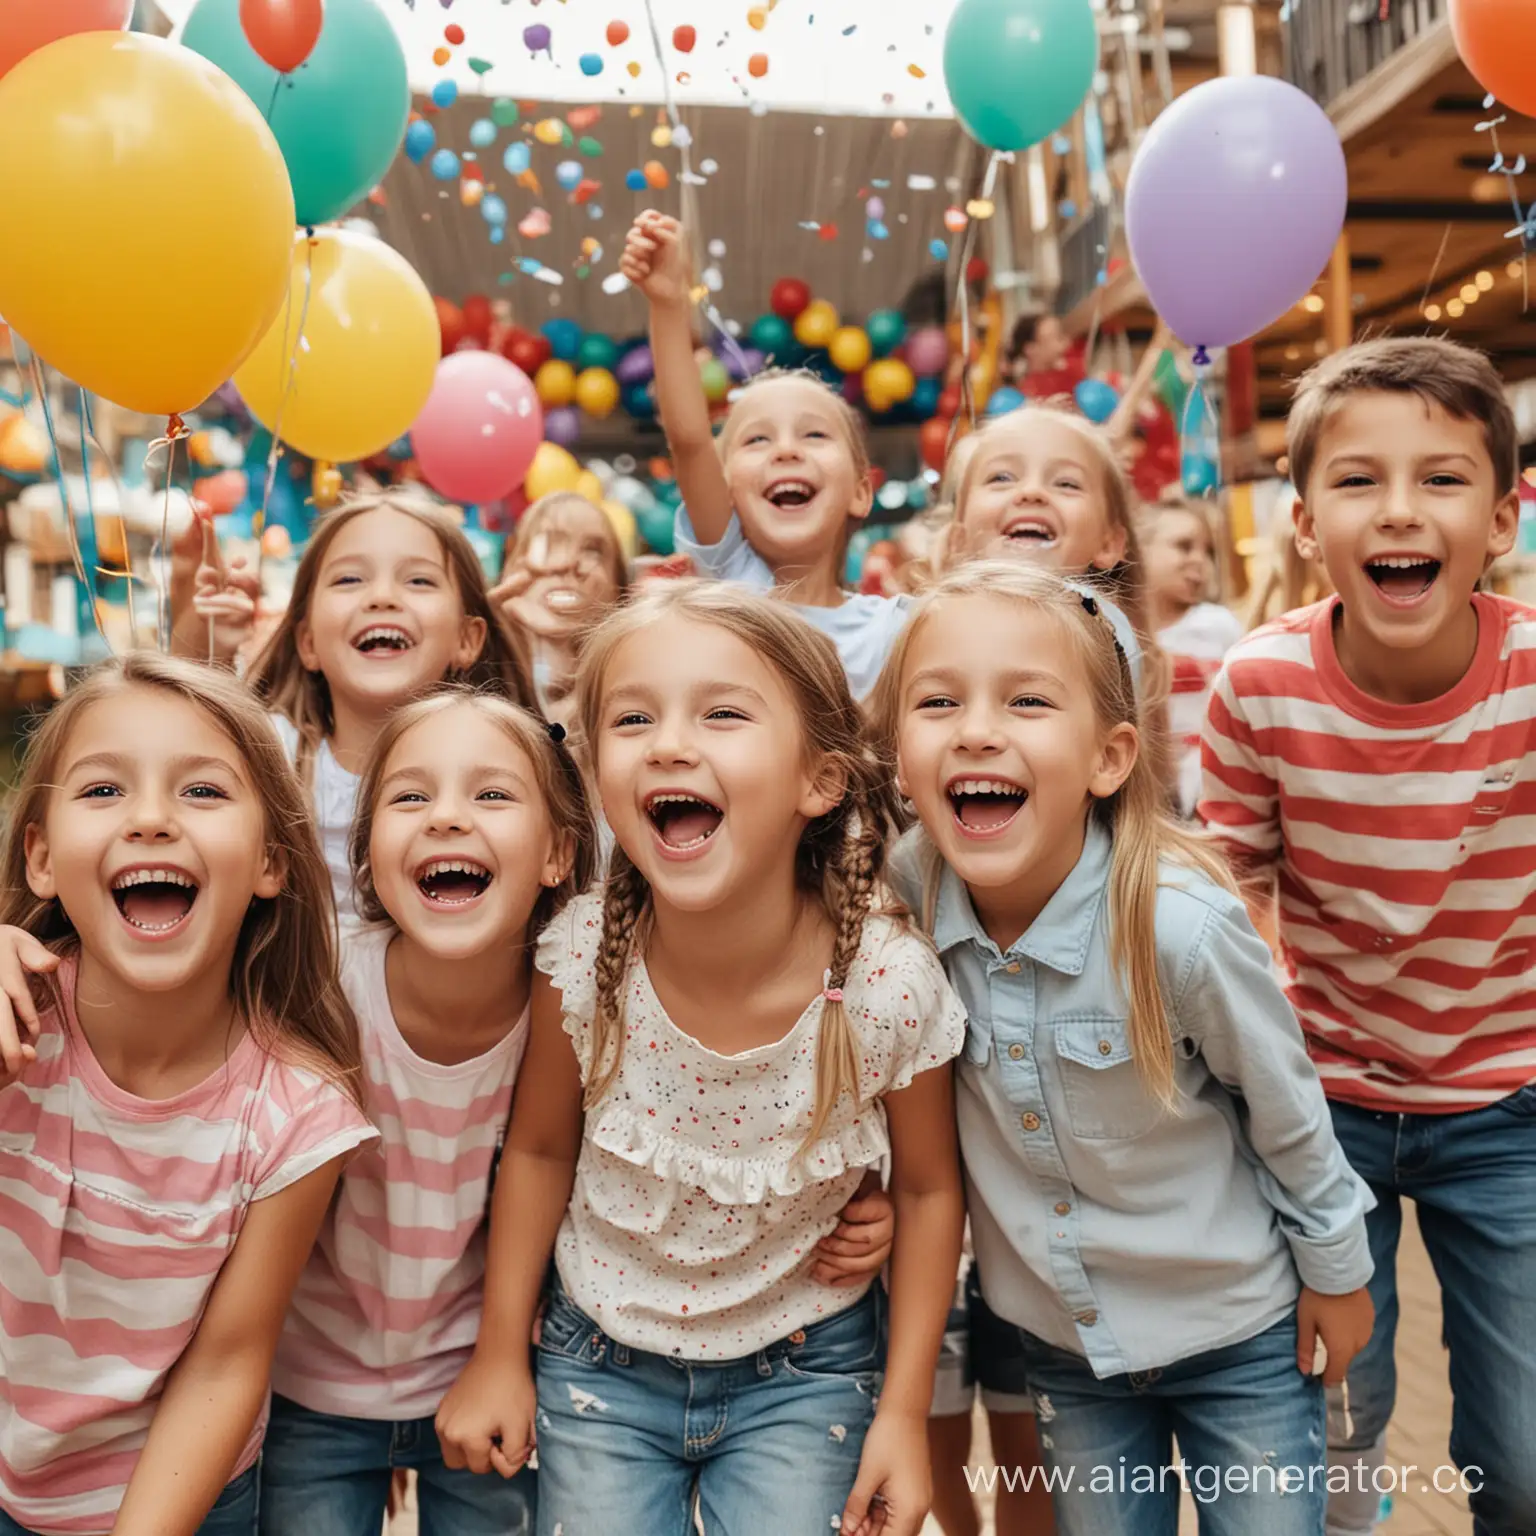 Joyful-Kids-Birthday-Playground-Celebration-at-a-Shopping-Center